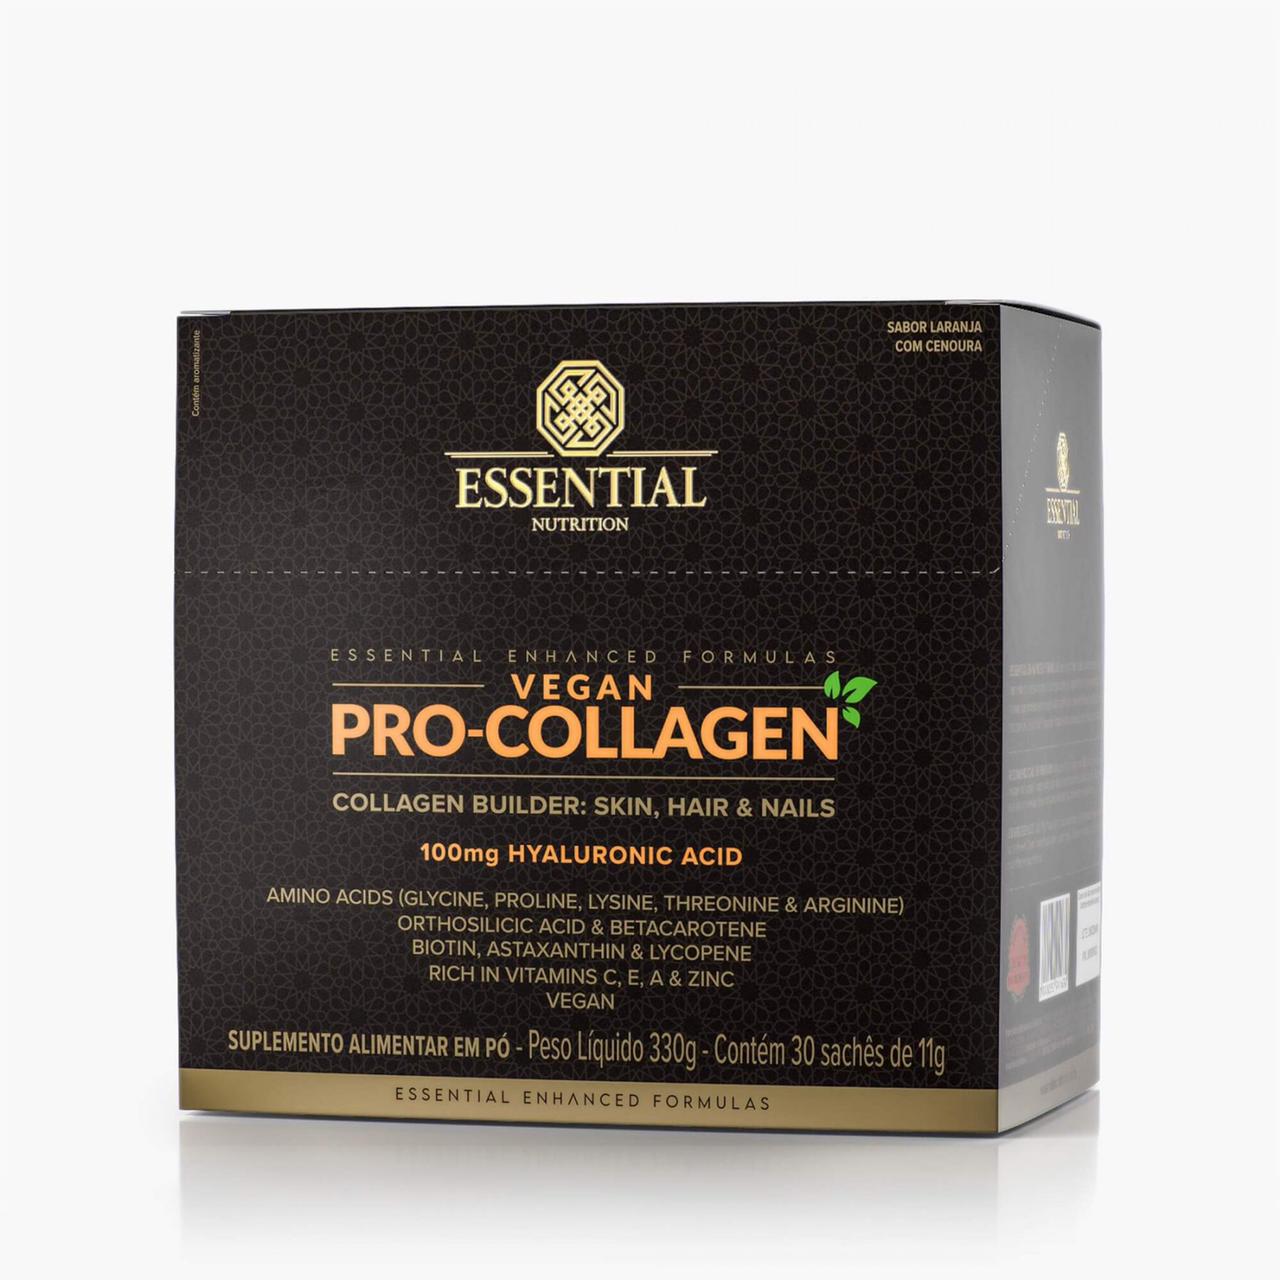 Essential Vegan Pro-Collagen Boxe Sabor Laranja com Cenoura contém 30 Sachês